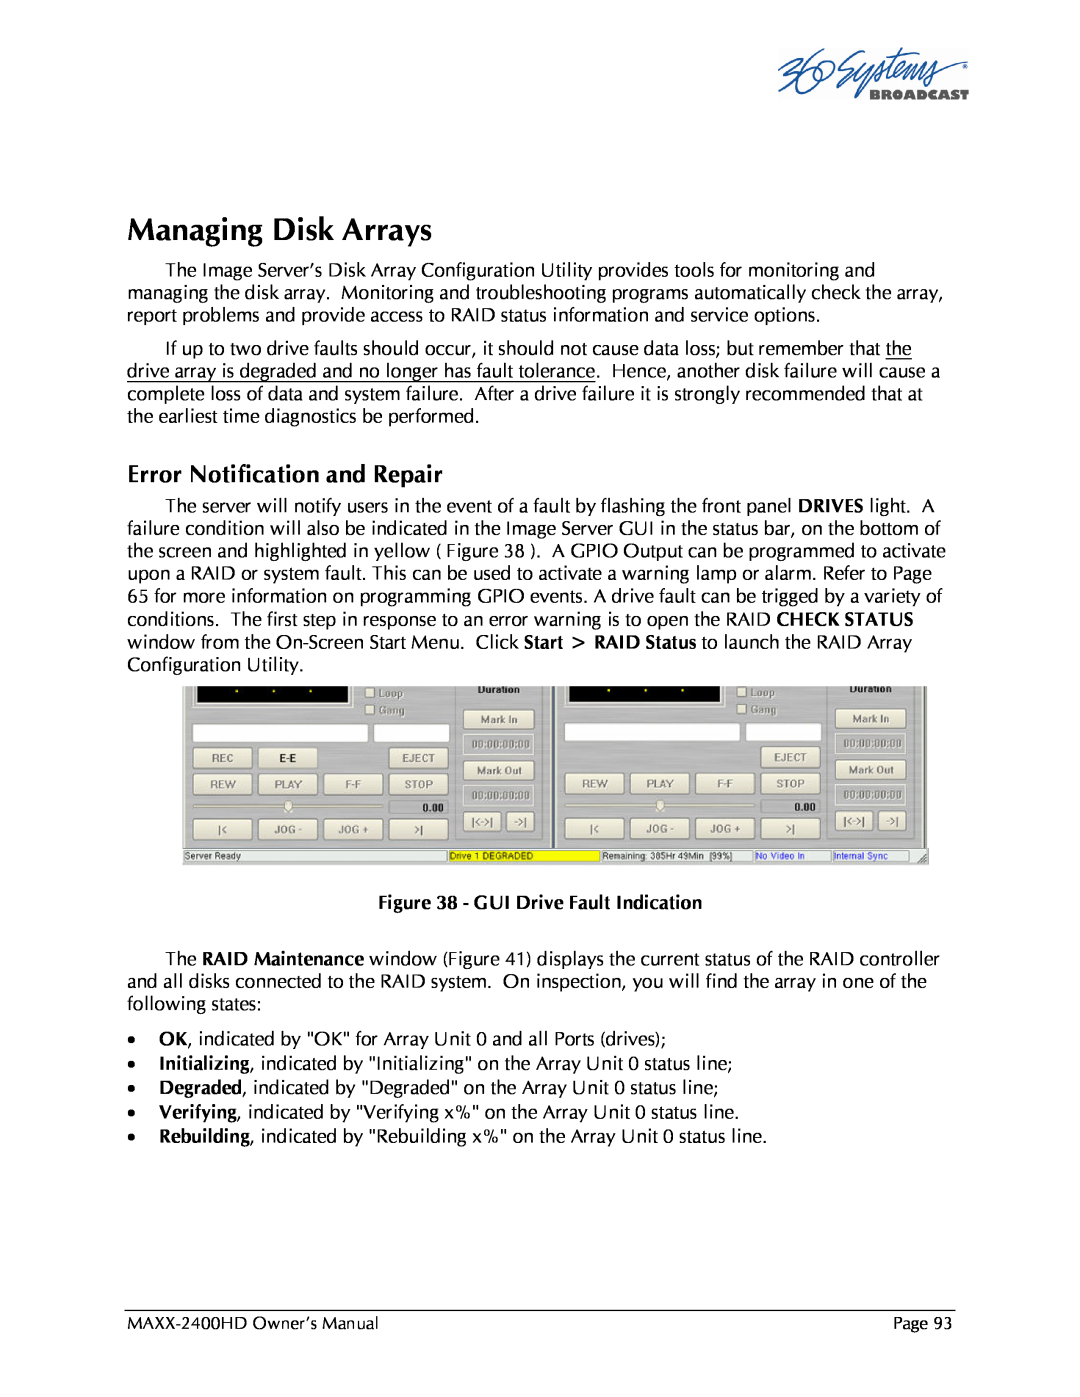 Maxxsonics MAXX-2400HD manual Managing Disk Arrays, Error Notification and Repair 